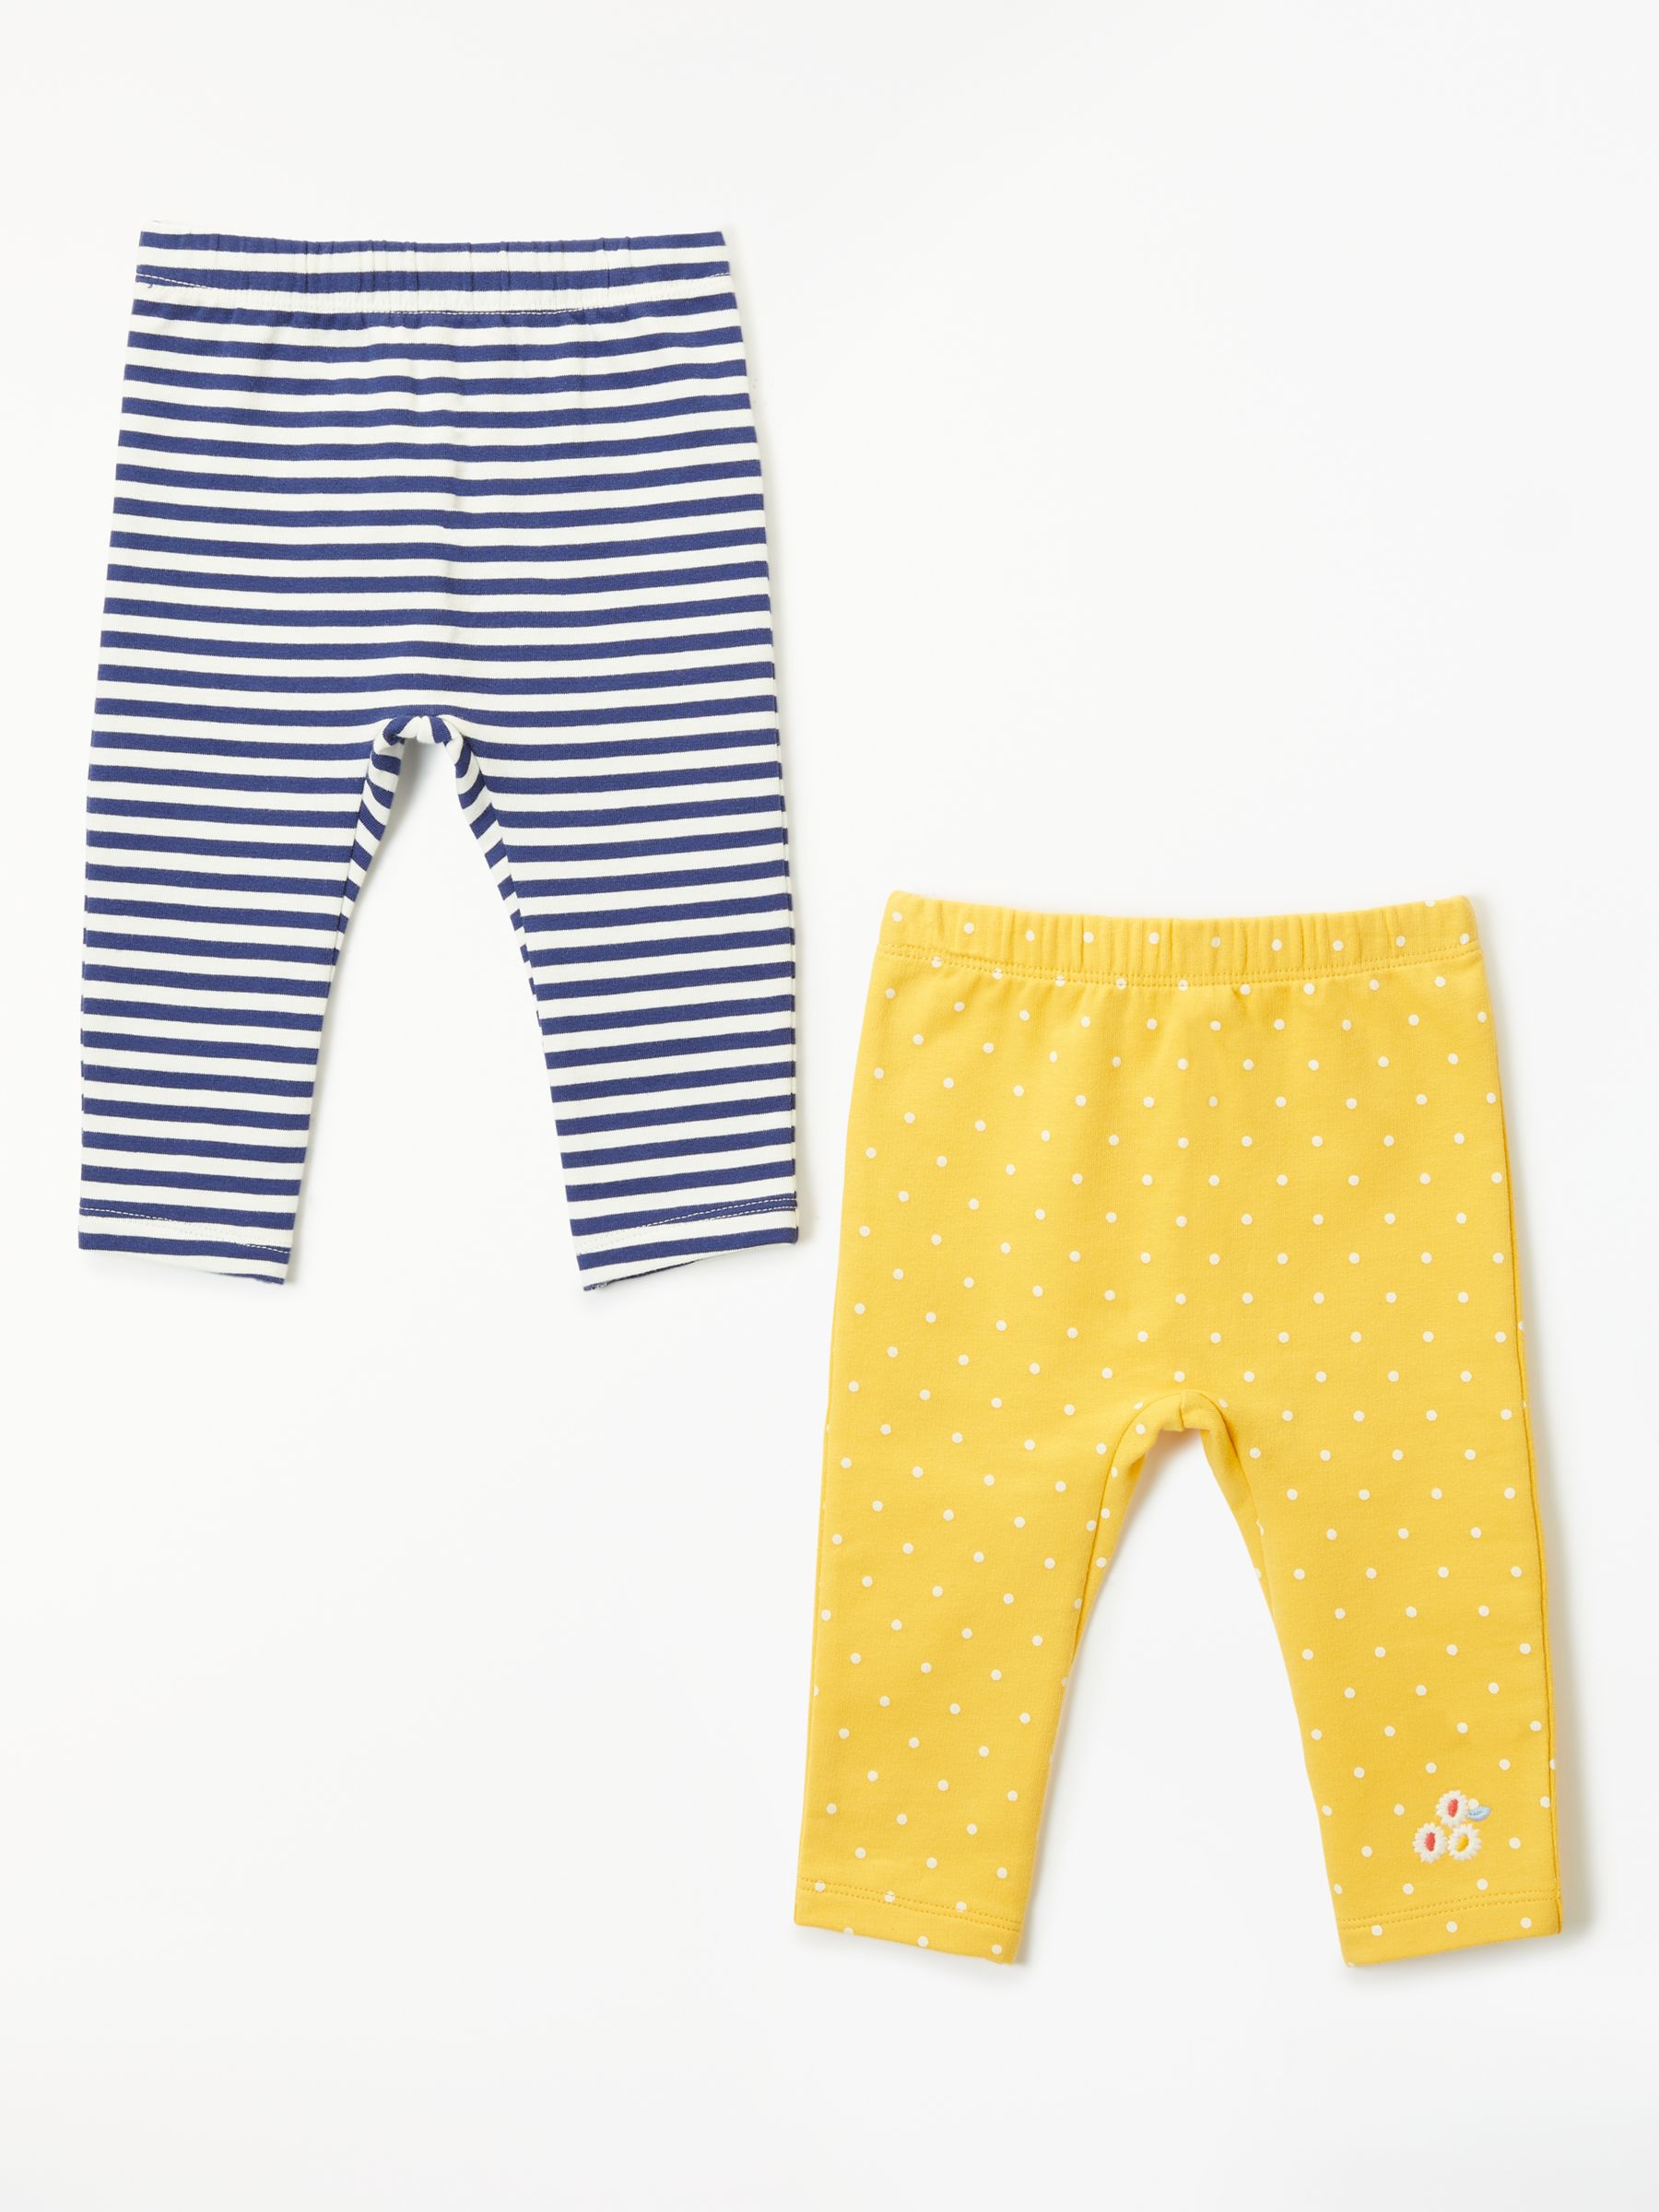 John Lewis & Partners Baby Stripe And Spot Leggings, Pack of 2, Multi